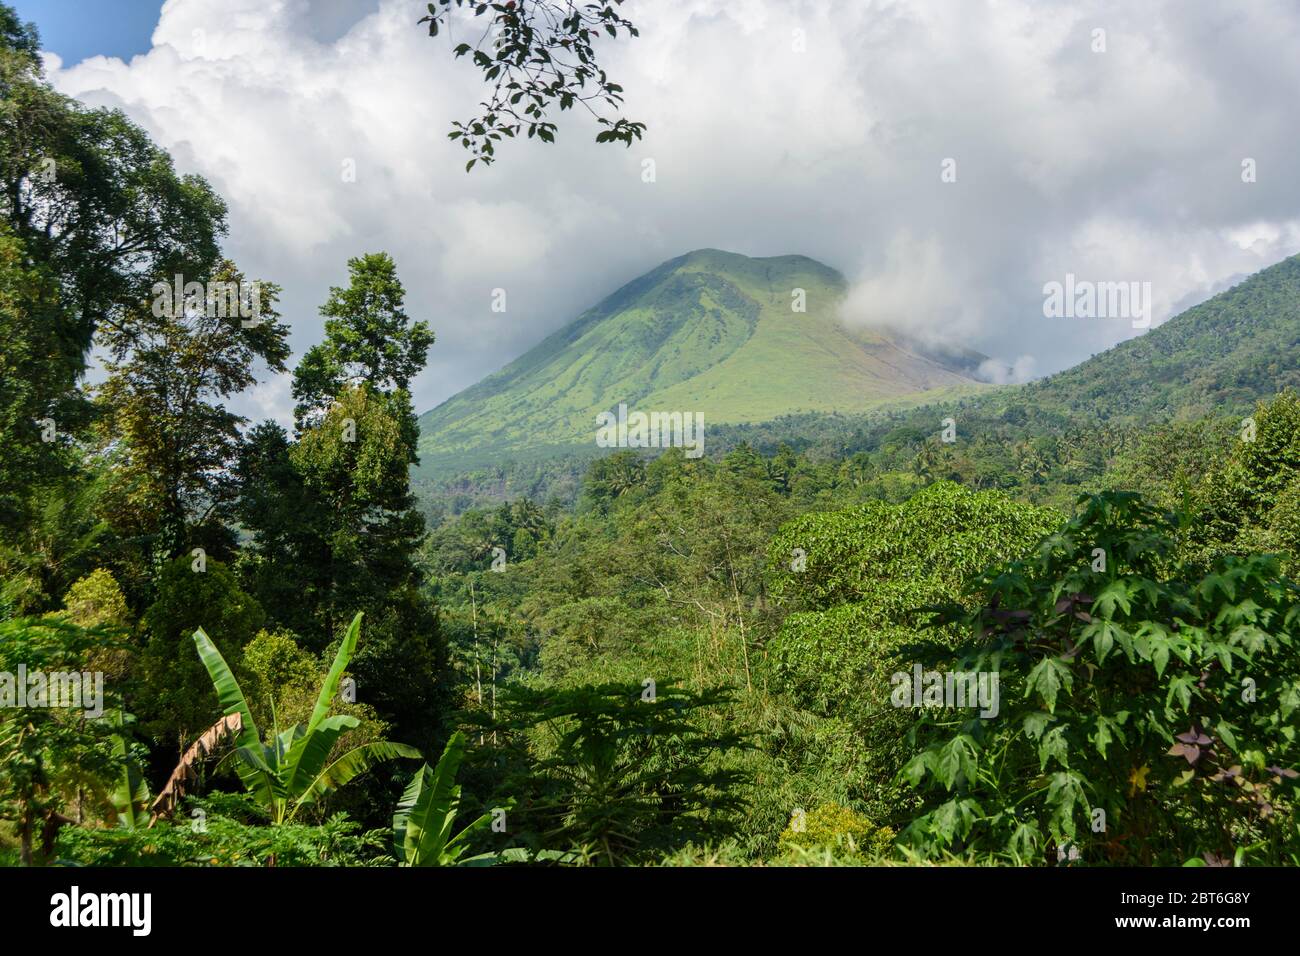 Mount Empung near Tomohon, Sulawesi, Indonesia. Stock Photo